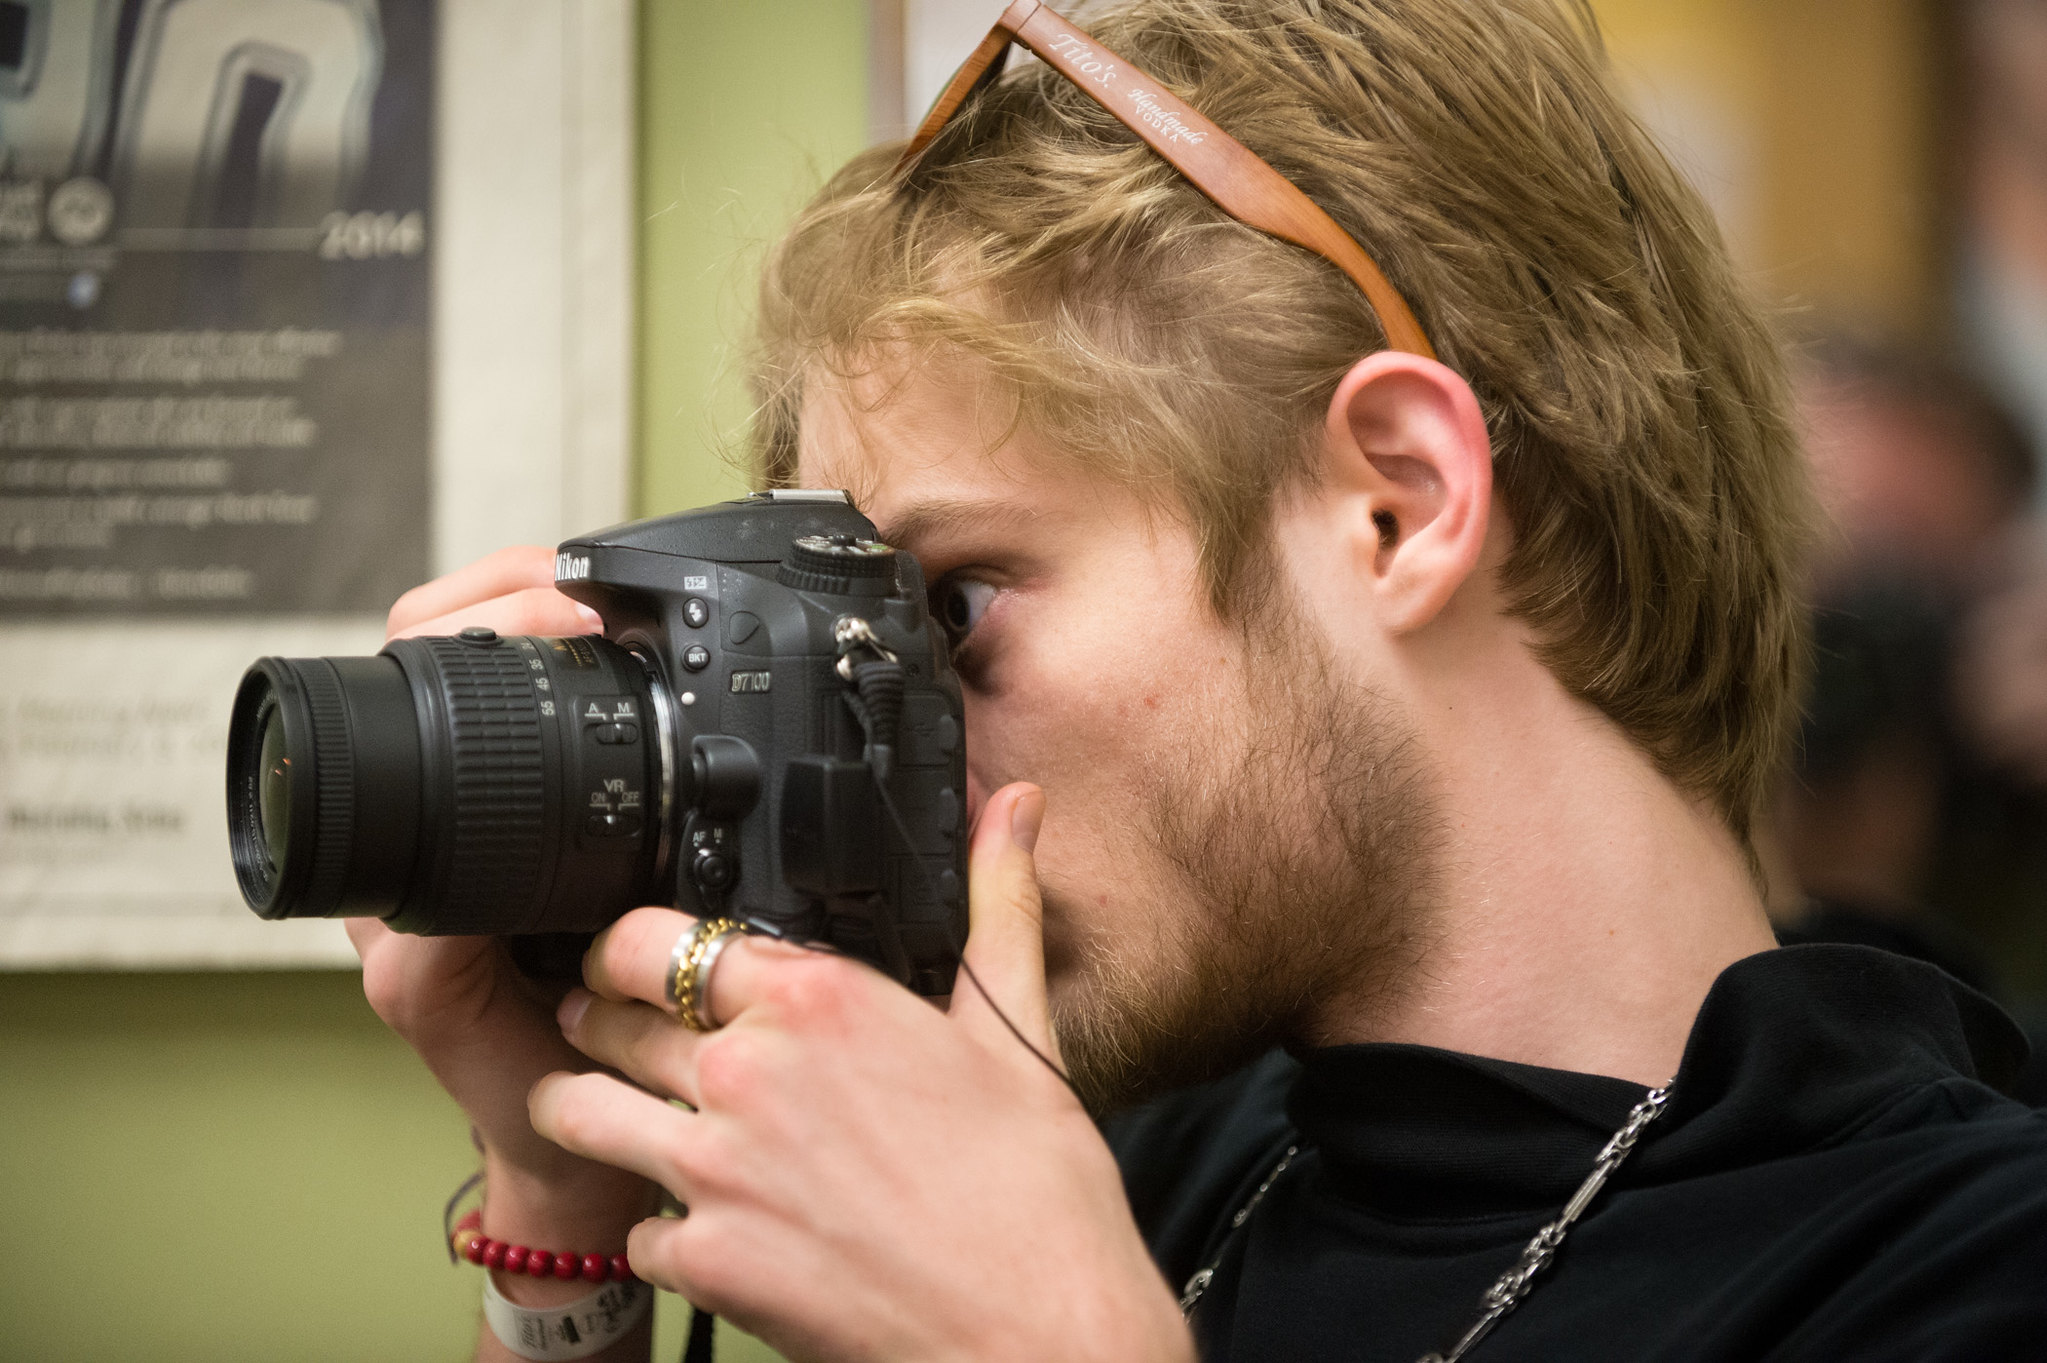 male student using camera